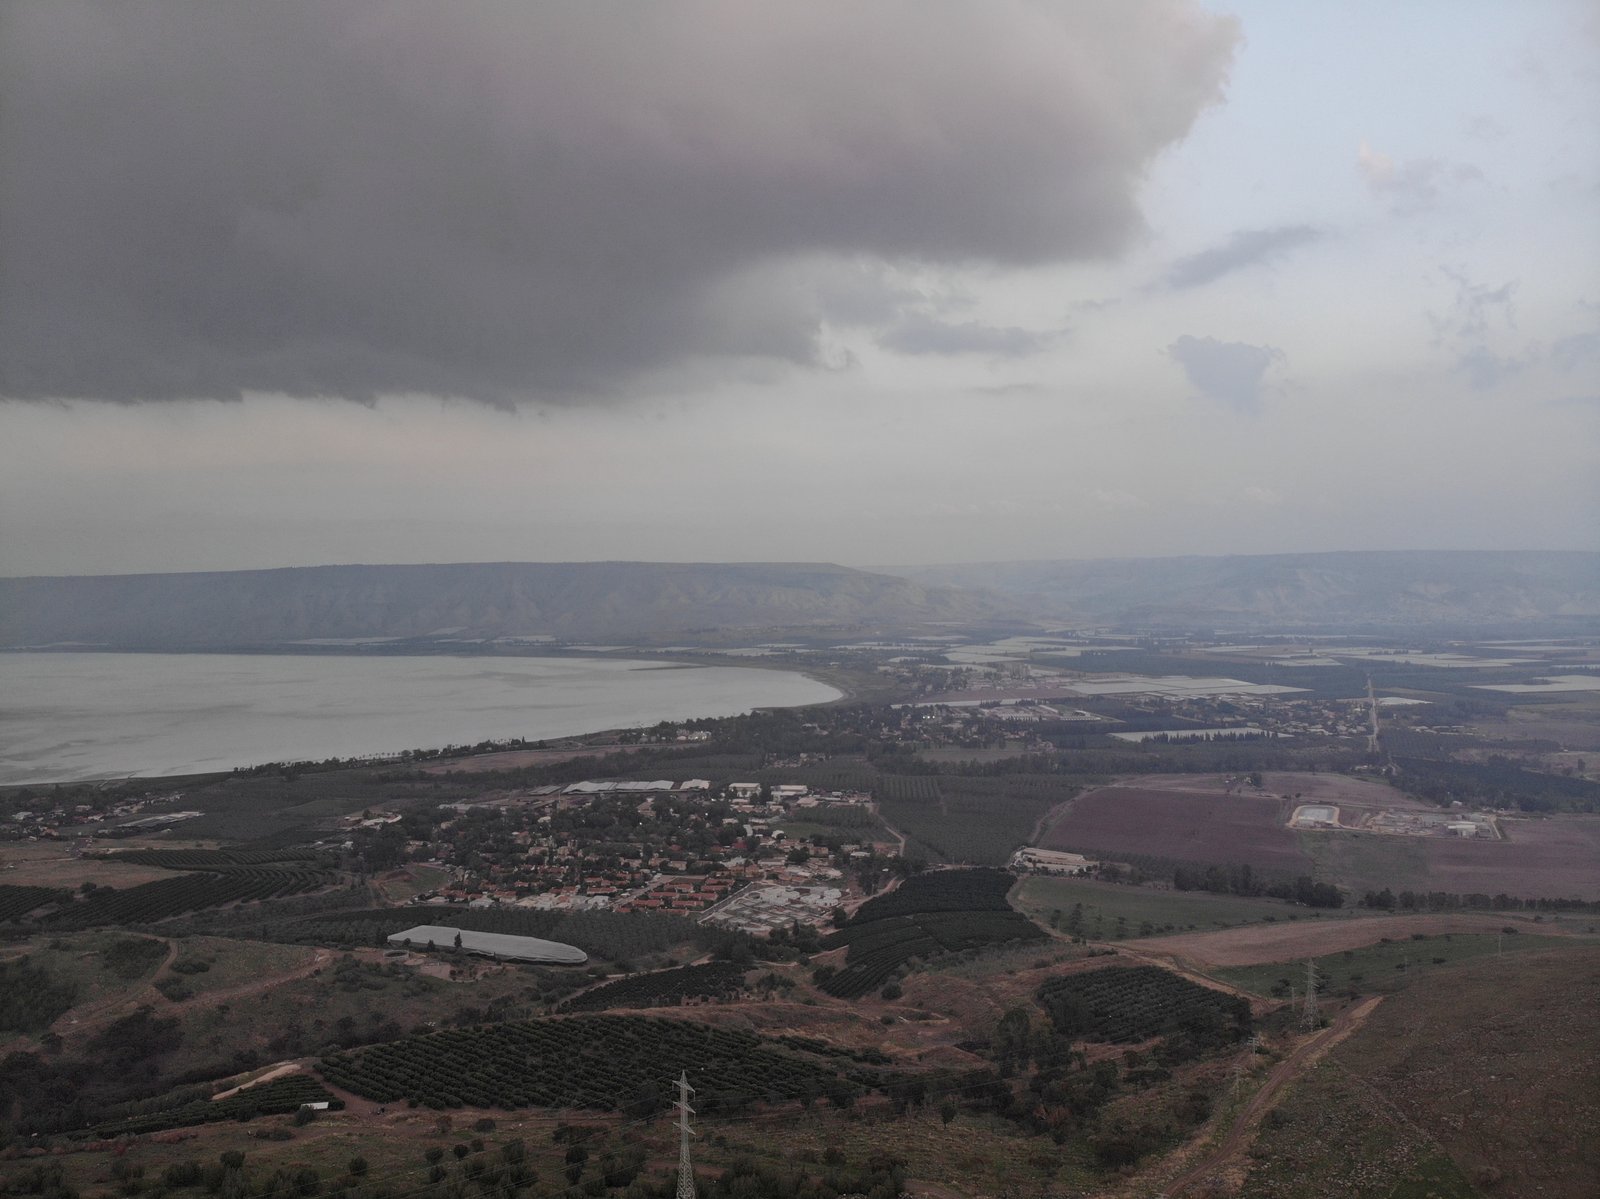 Sea of Galilee, Jordan Valley and Golan Hills